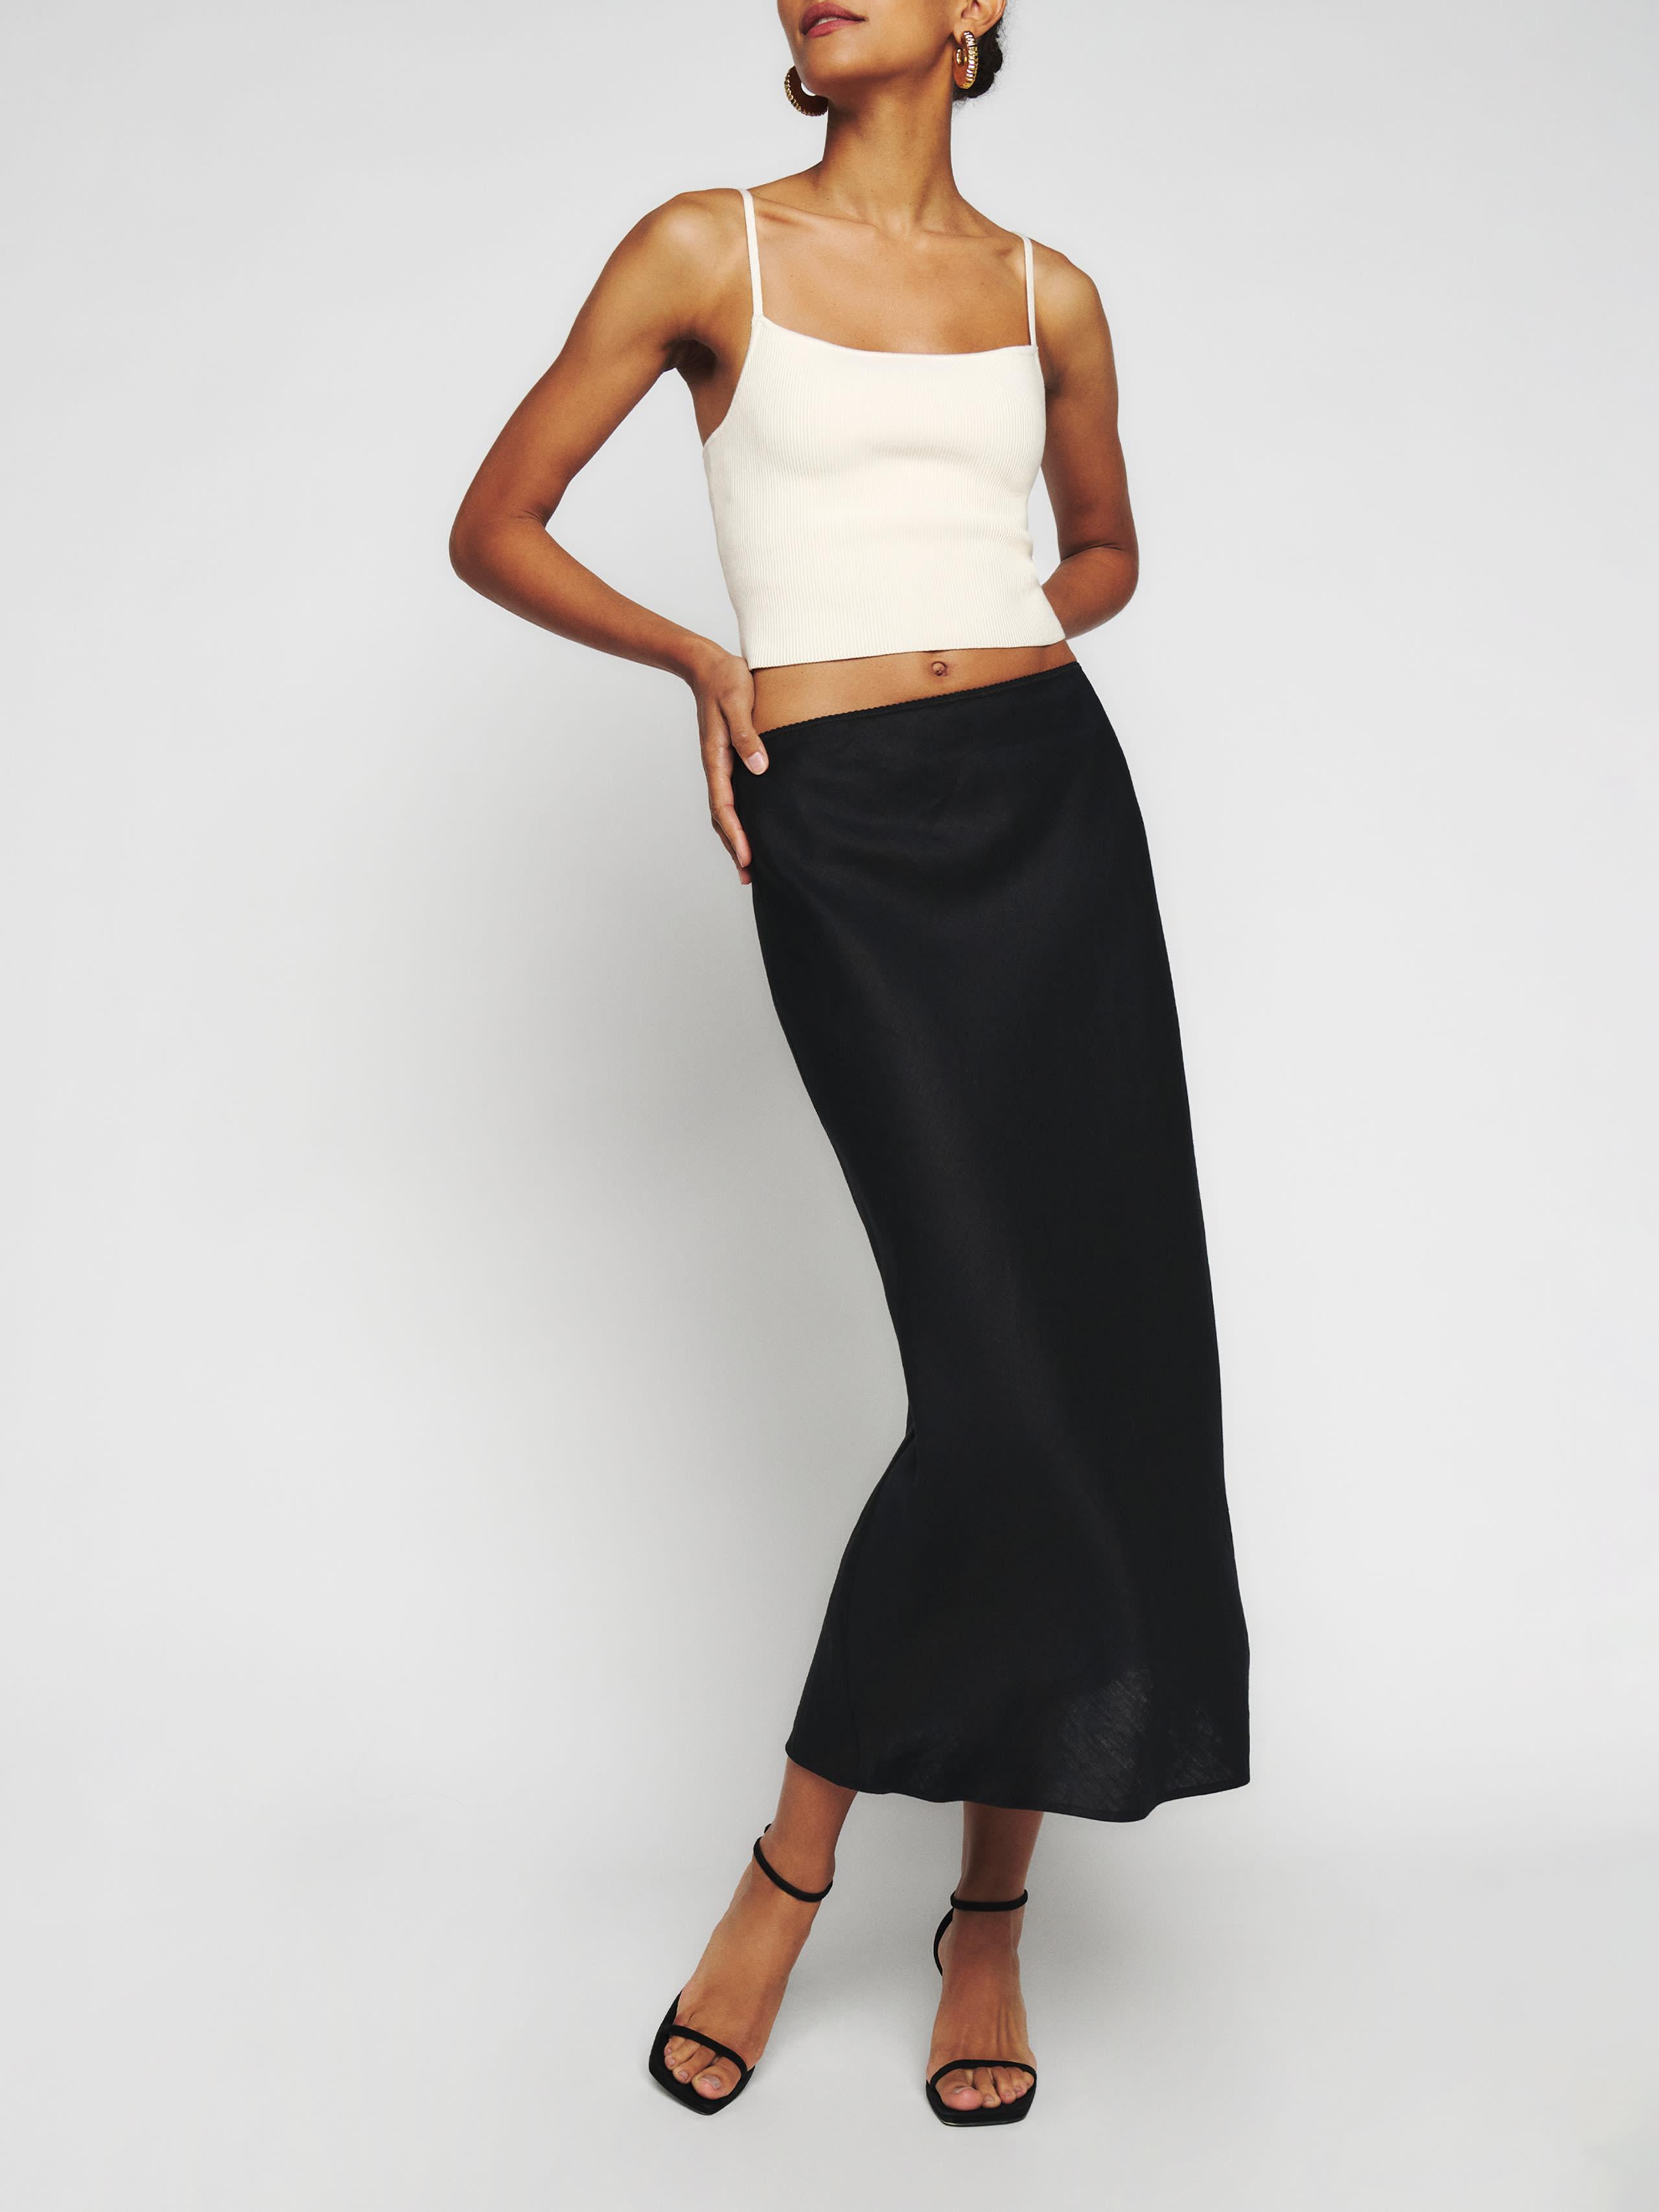 Reformation Layla Linen Skirt in Black | Lyst